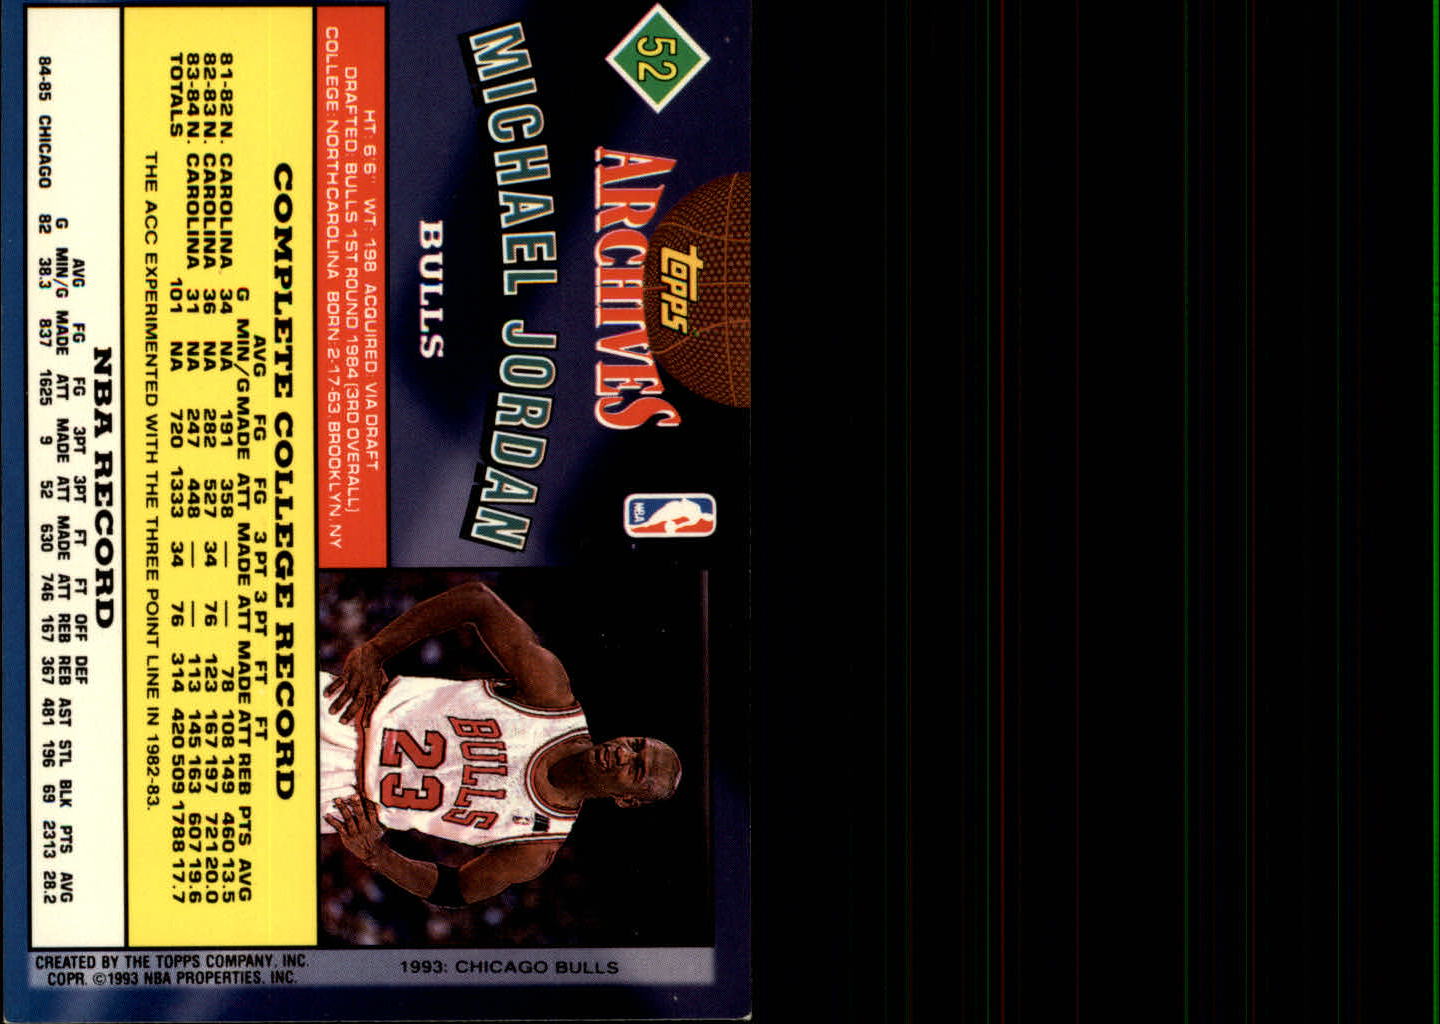 1992-93 Topps Archives #52 Michael Jordan - NM-MT+